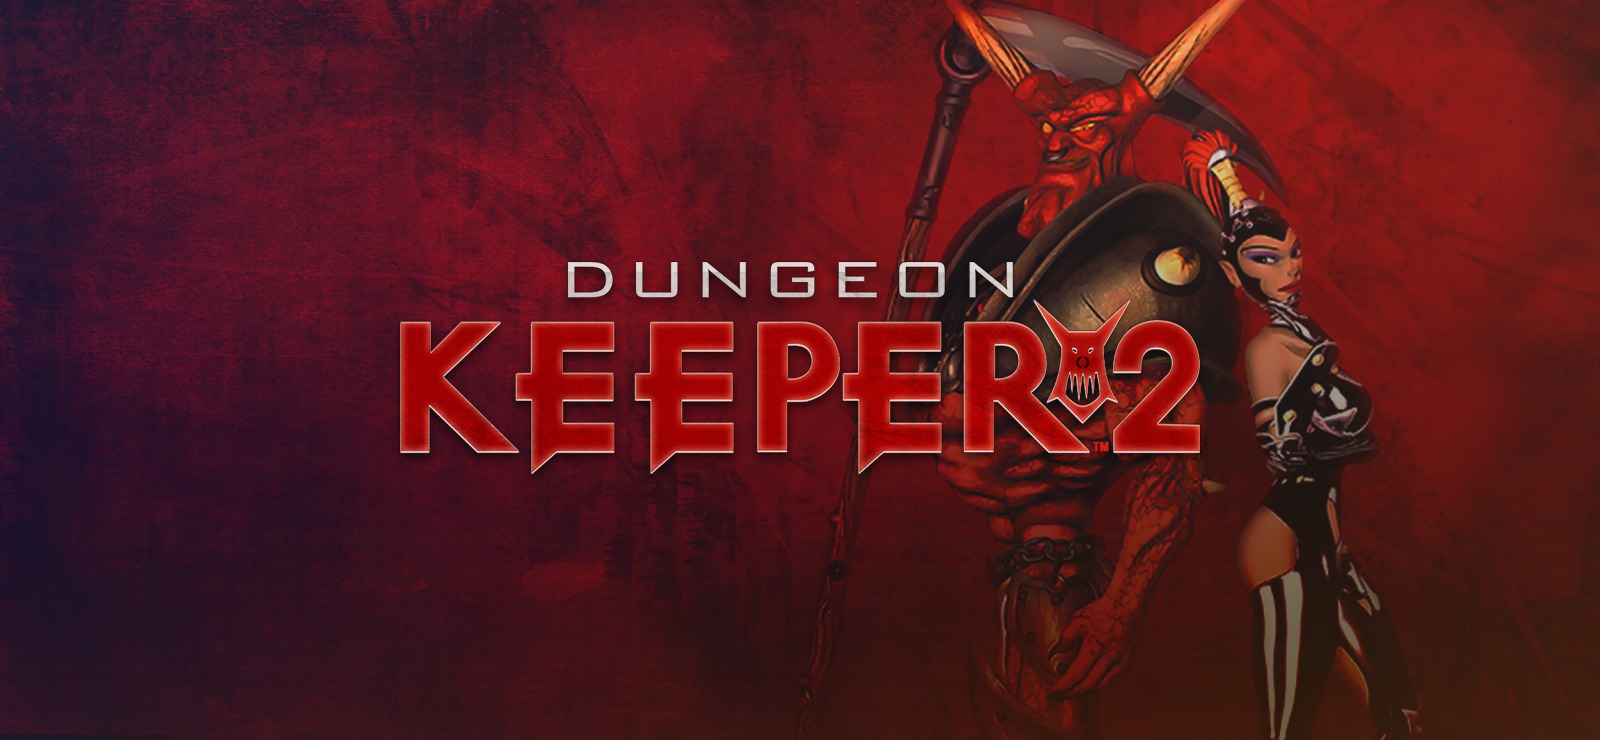 dungeon keeper 2 download full game free mac